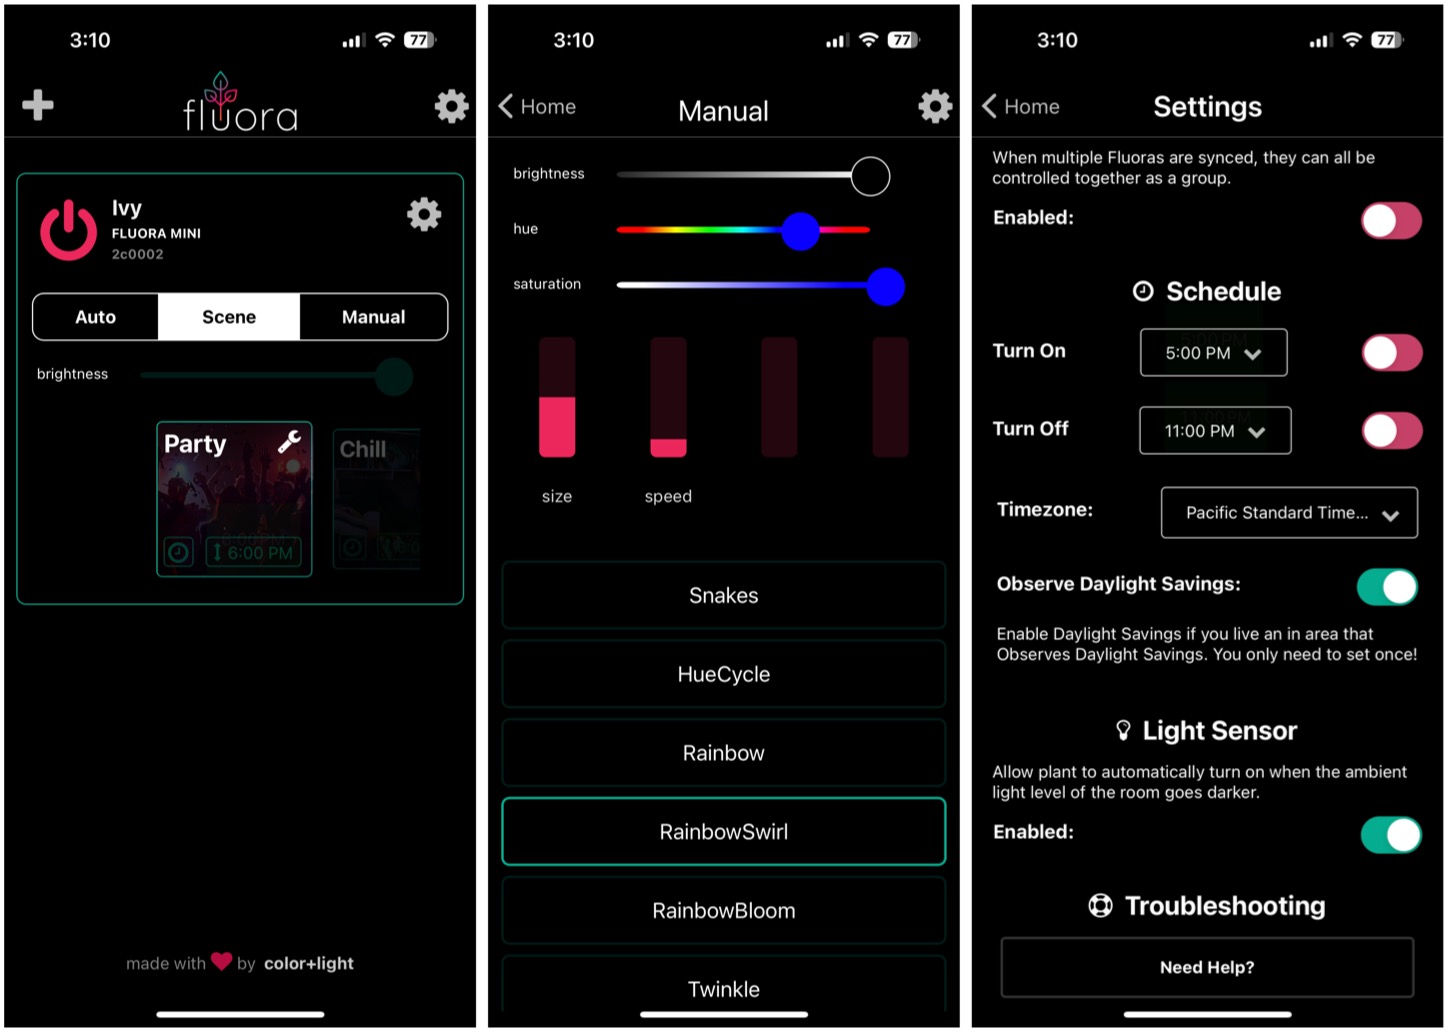 Screenshots of the Fluora app on iOS.